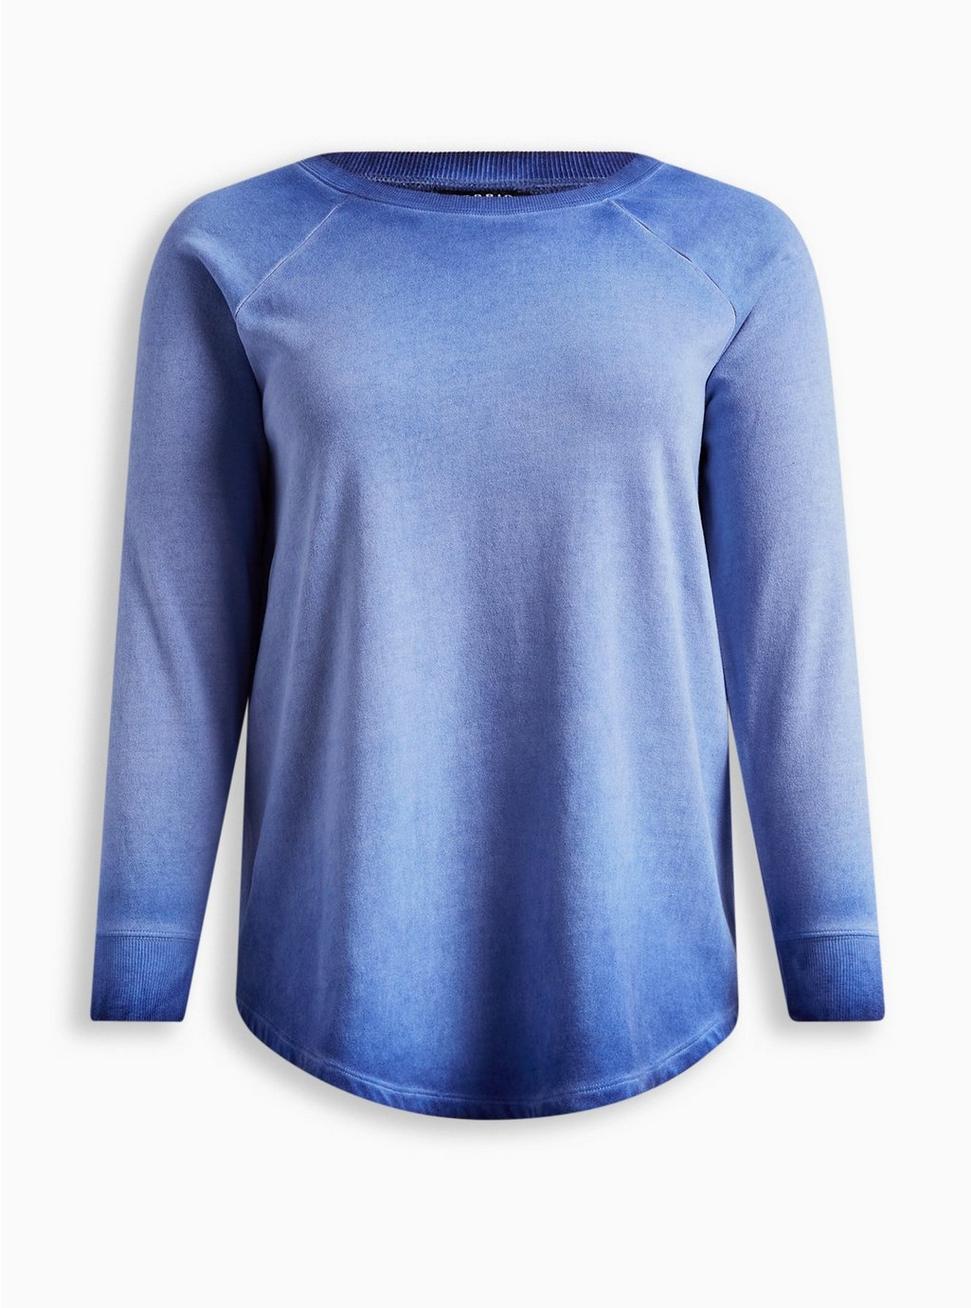 Plus Size Classic Fit Cozy Fleece Crew Neck Raglan Tunic Sweatshirt, BLUE, hi-res